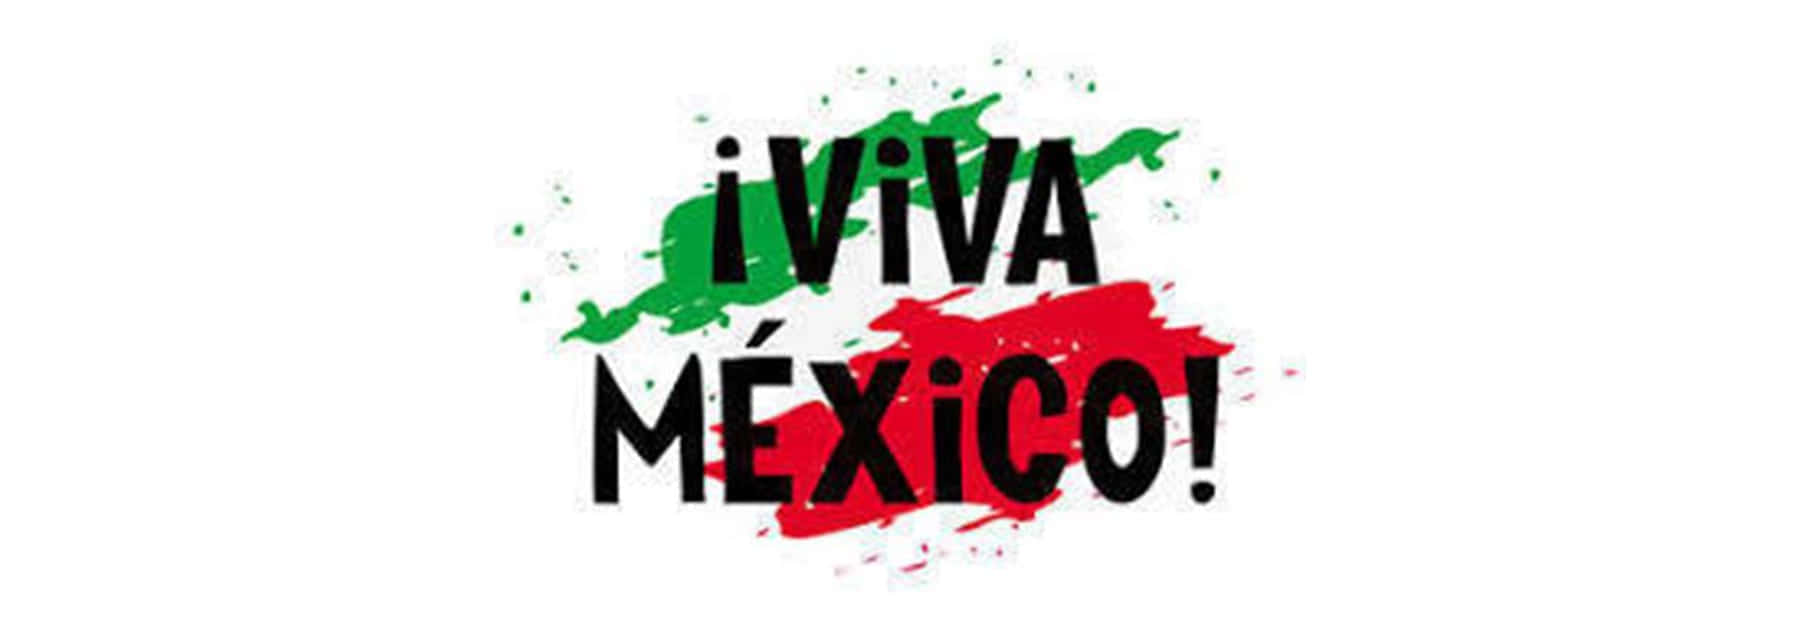 Celebrate With Viva Mexico!